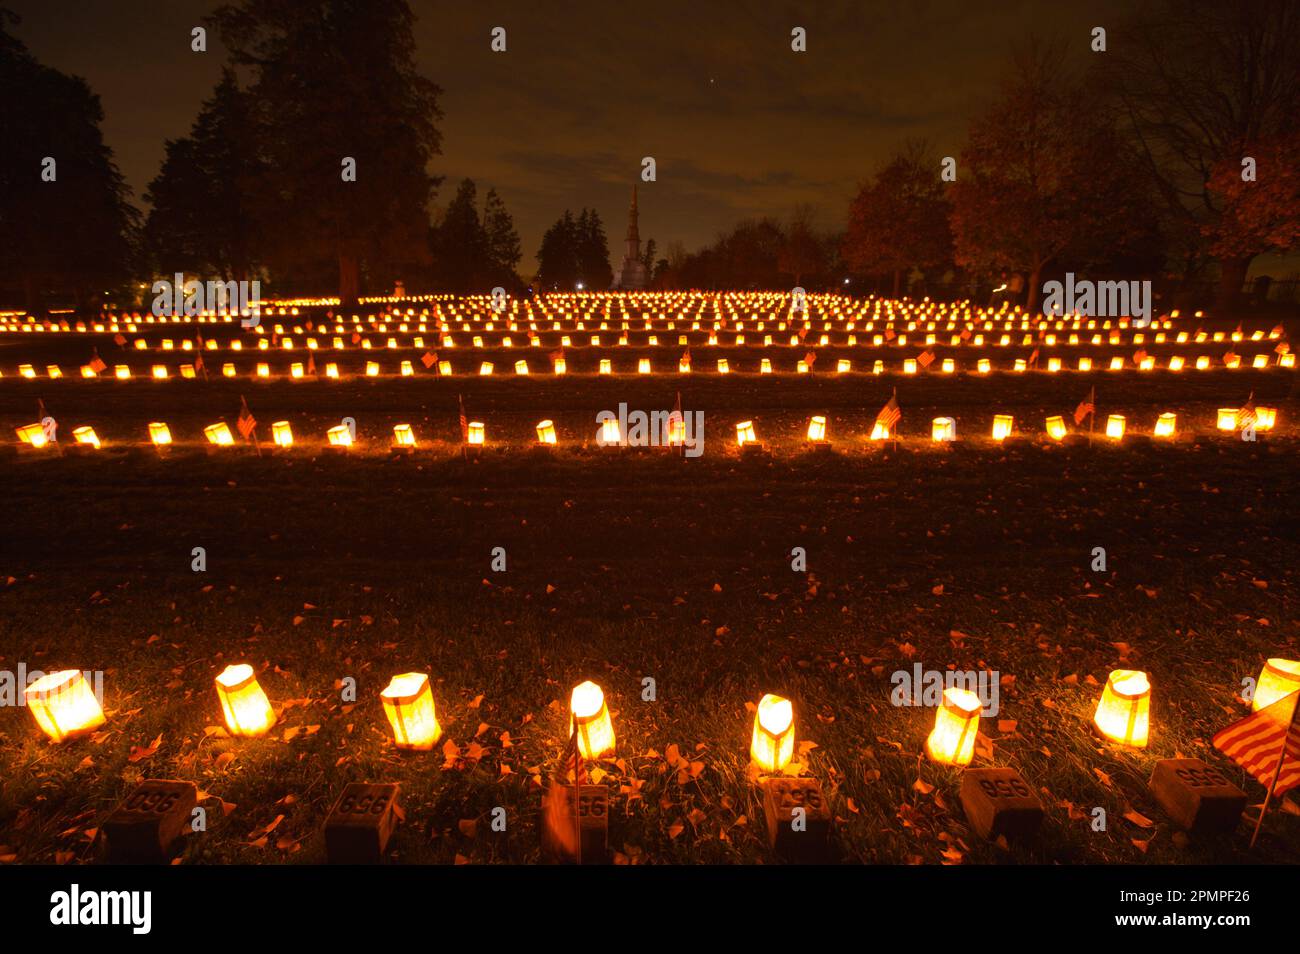 Illuminated lanterns at the anniversary celebration of Lincoln's Gettysburg address, November 19th, 1863 Stock Photo